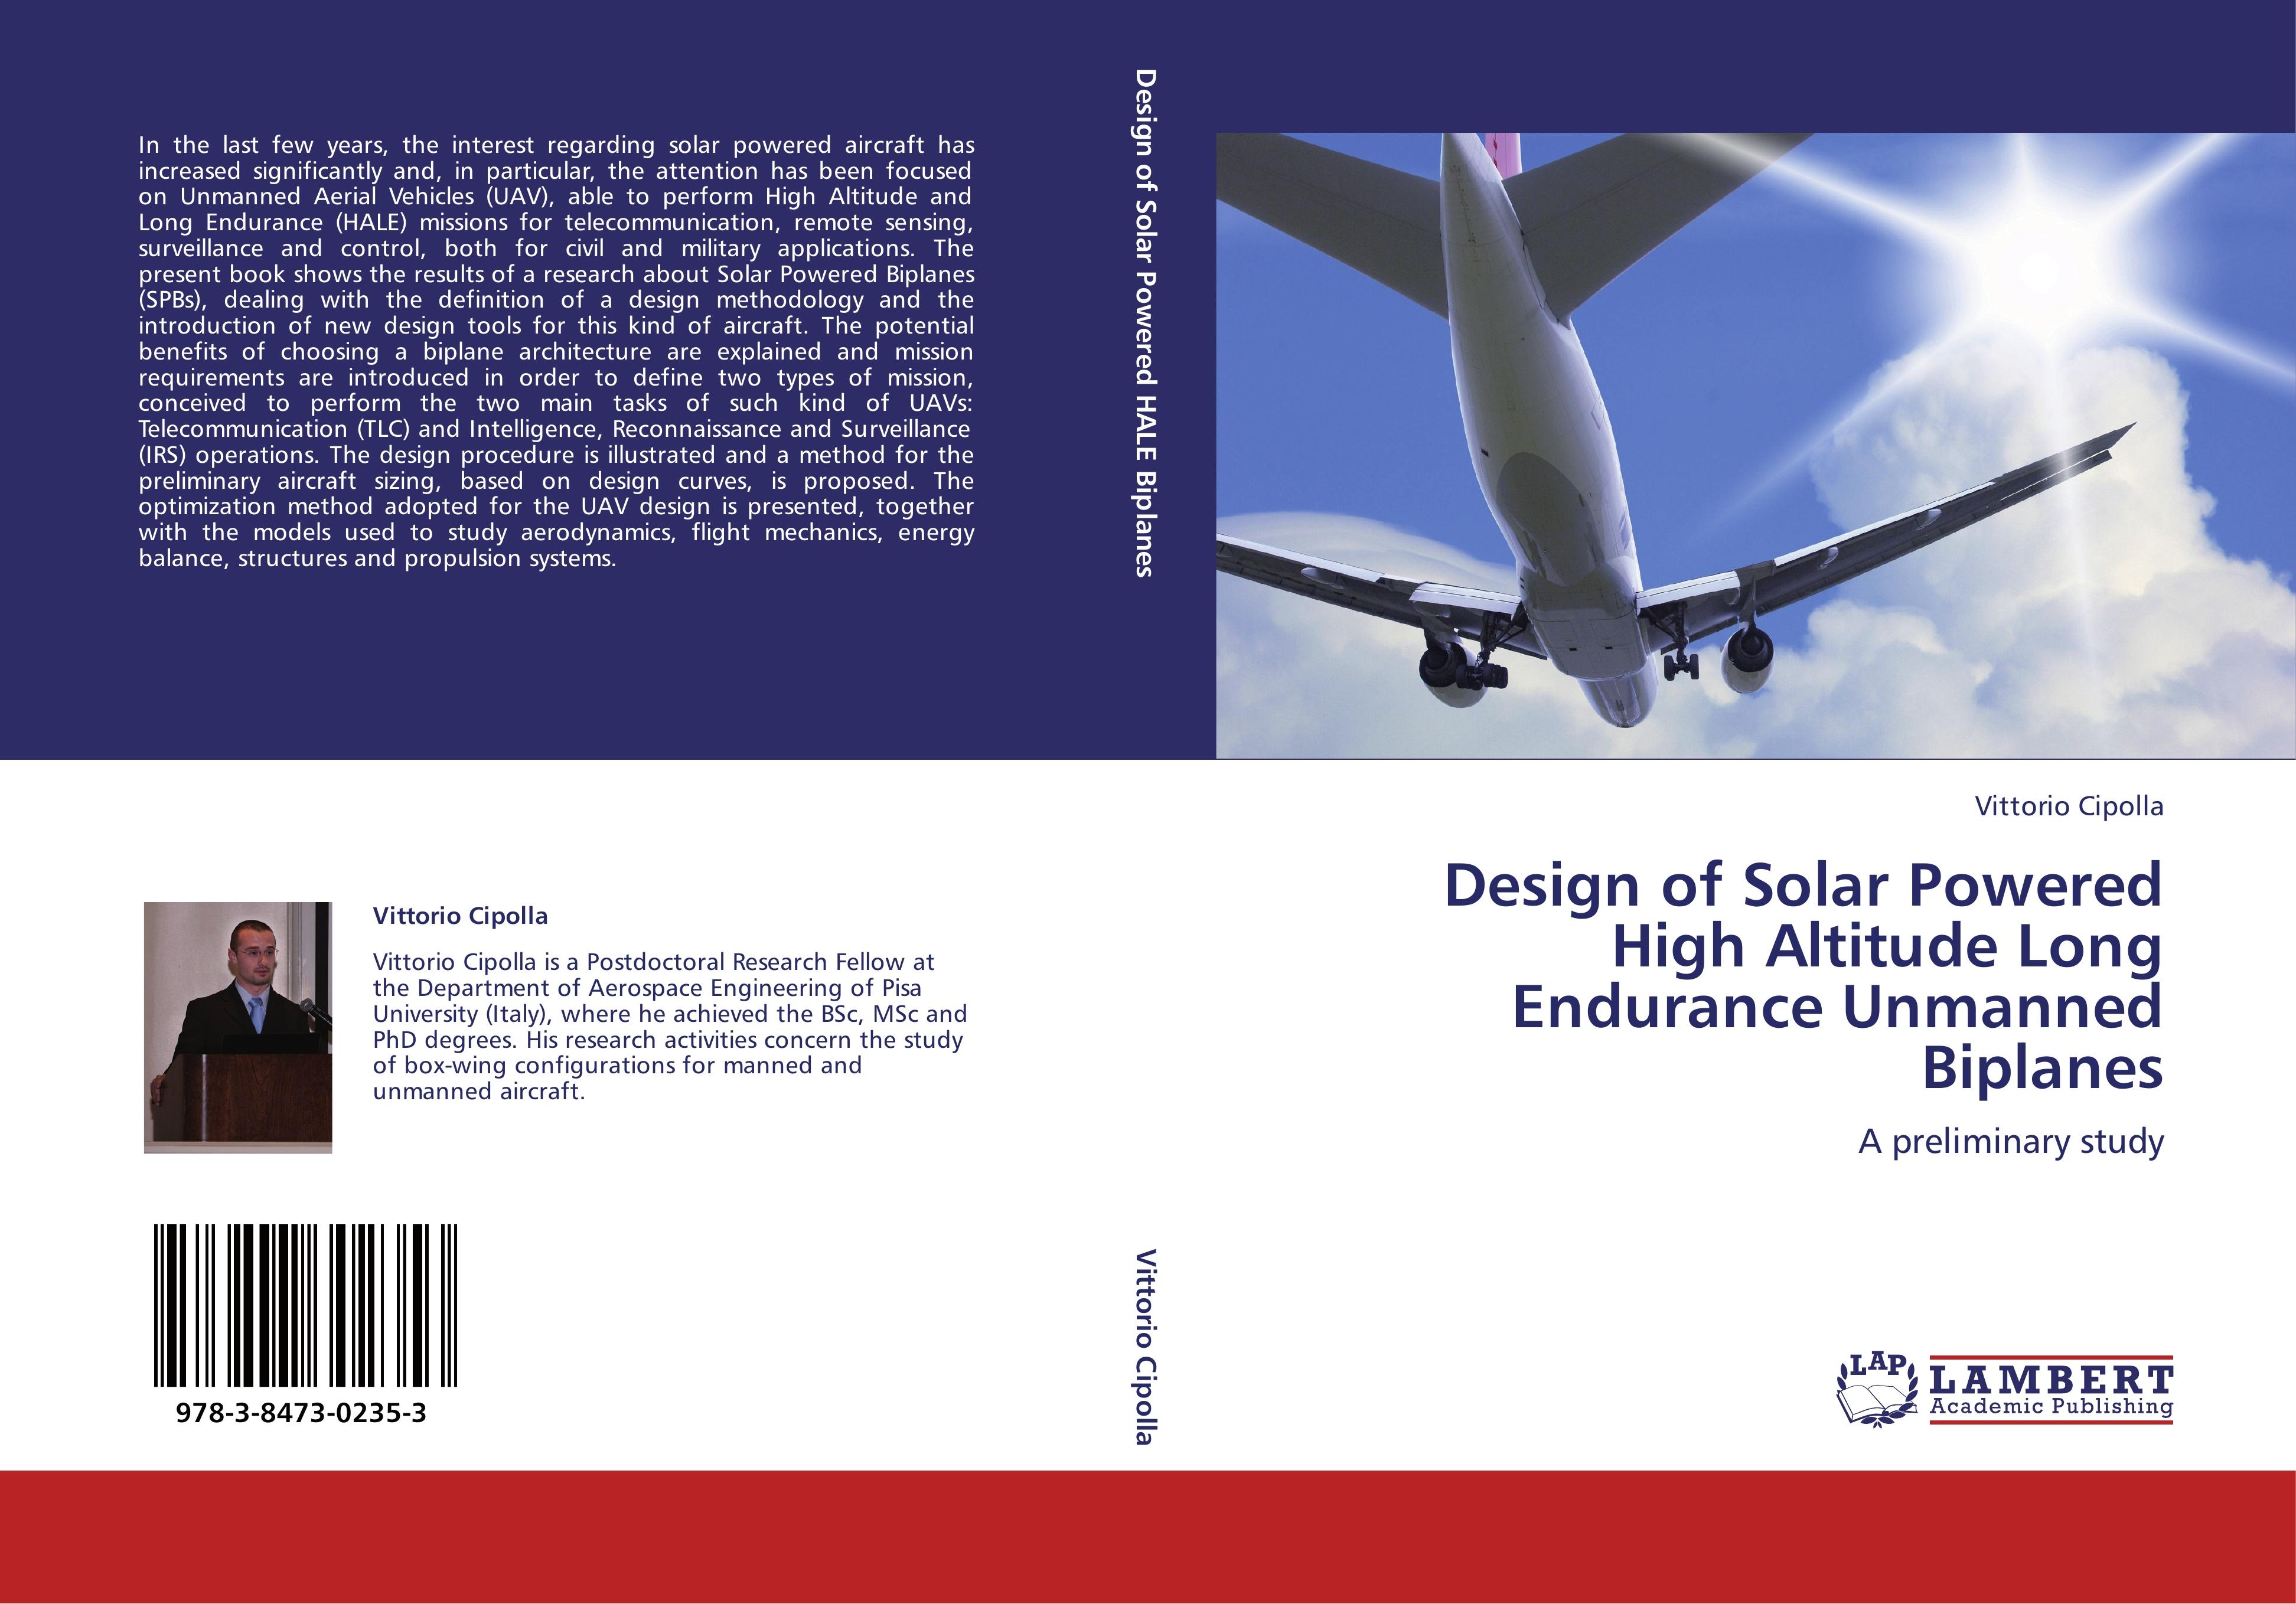 Design of Solar Powered High Altitude Long Endurance Unmanned Biplanes - Vittorio Cipolla